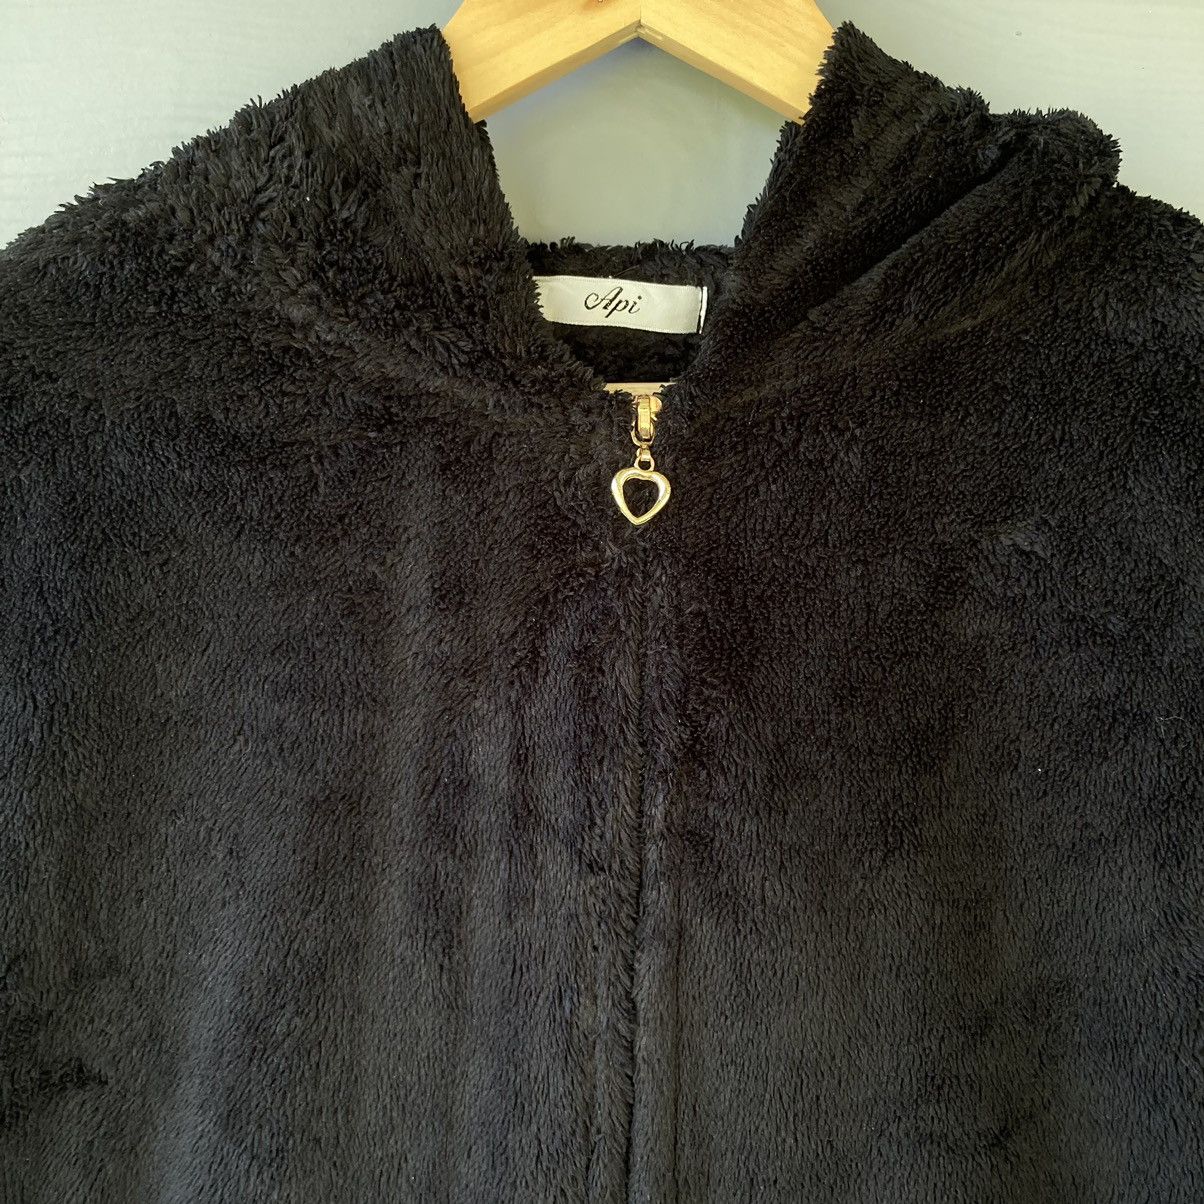 Vintage Api Black Fleece Sweater - 3